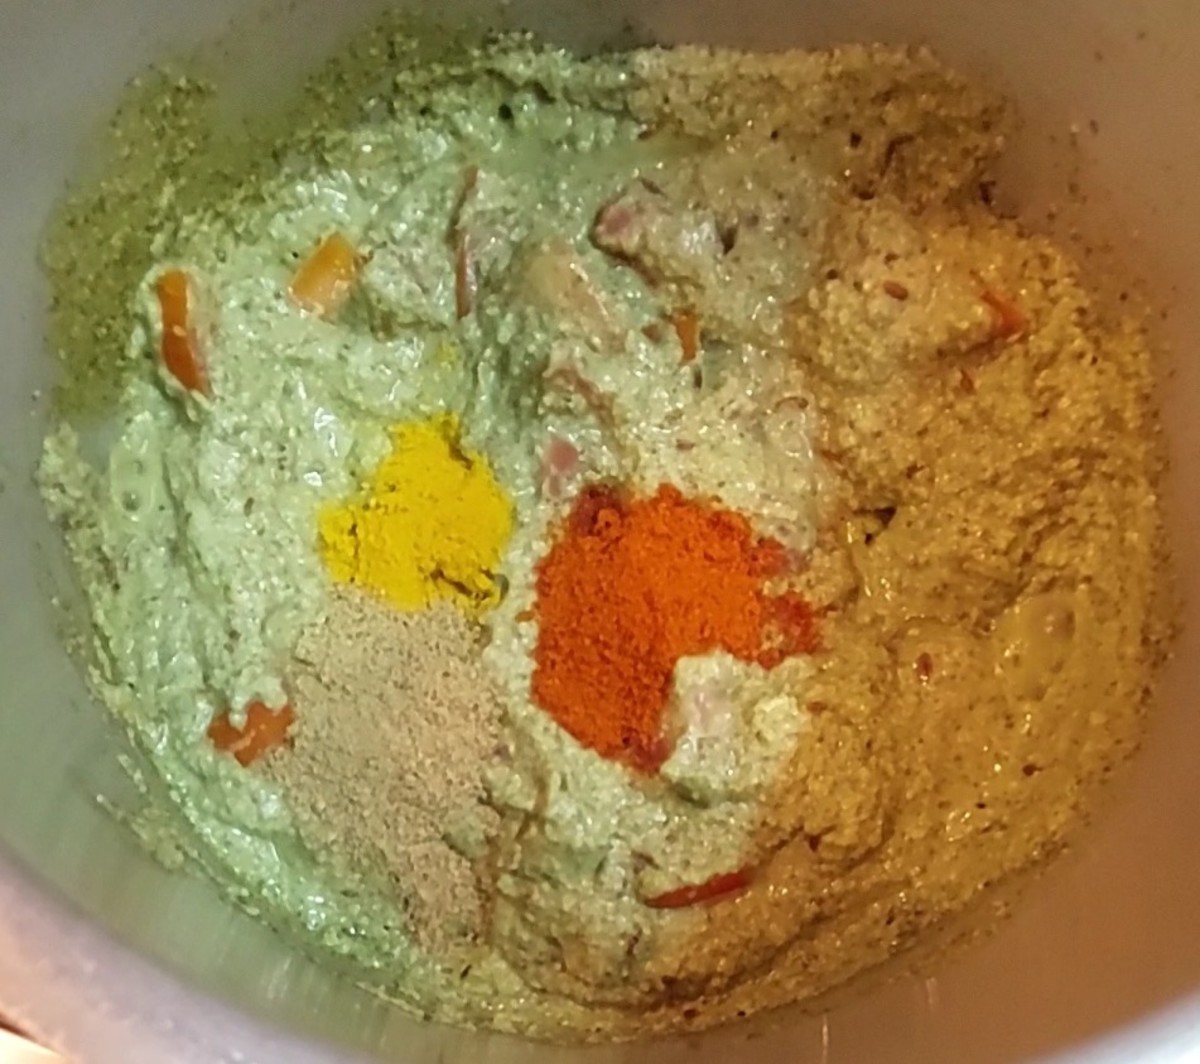 Add 1/2 teaspoon turmeric powder, 1 teaspoon red chili powder and 1 teaspoon coriander powder. Mix well.